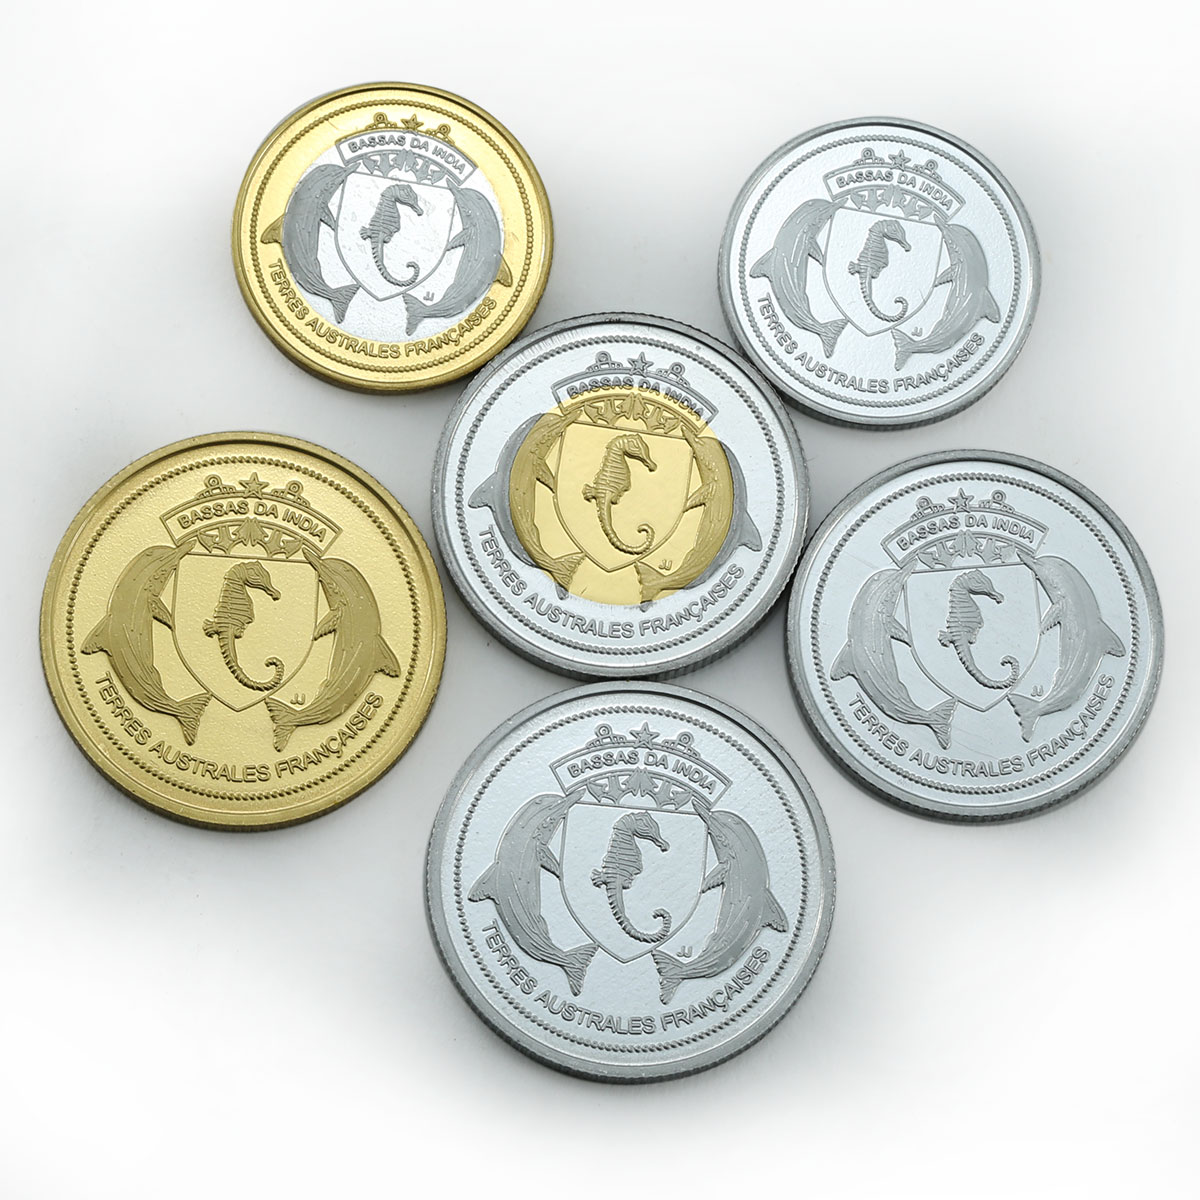 Bassas da India, set of 6 coins, reissues, Ships, Sailboats, 2012